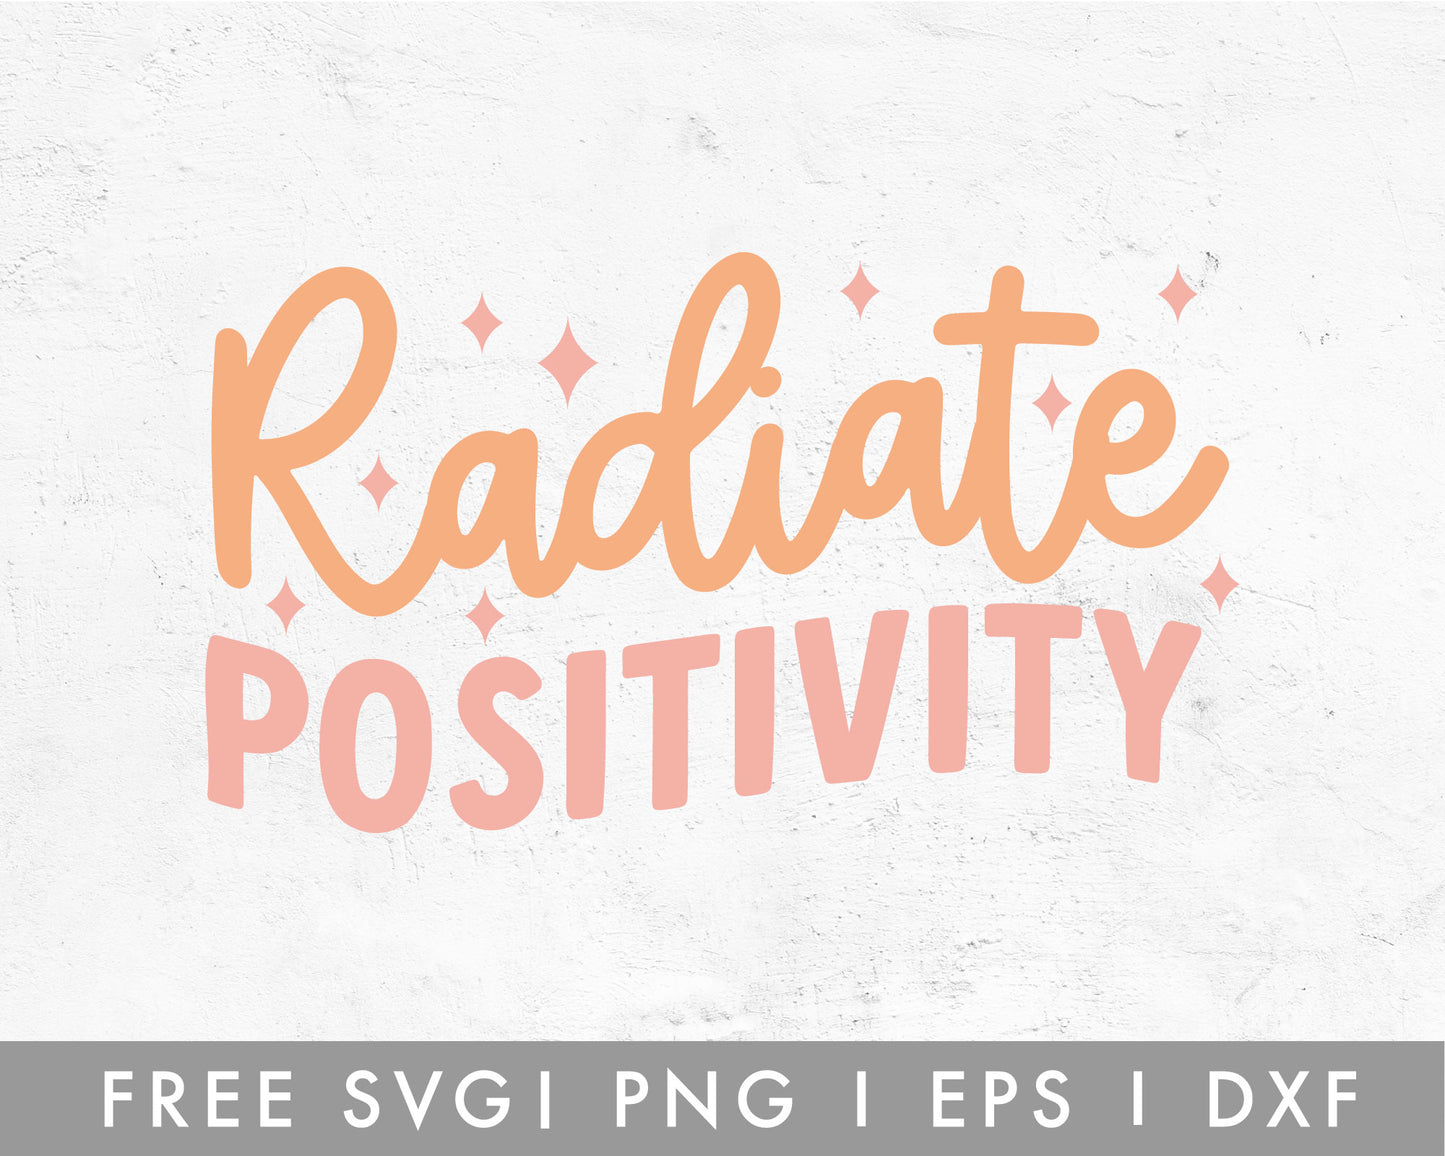 FREE Radiate Positively SVG